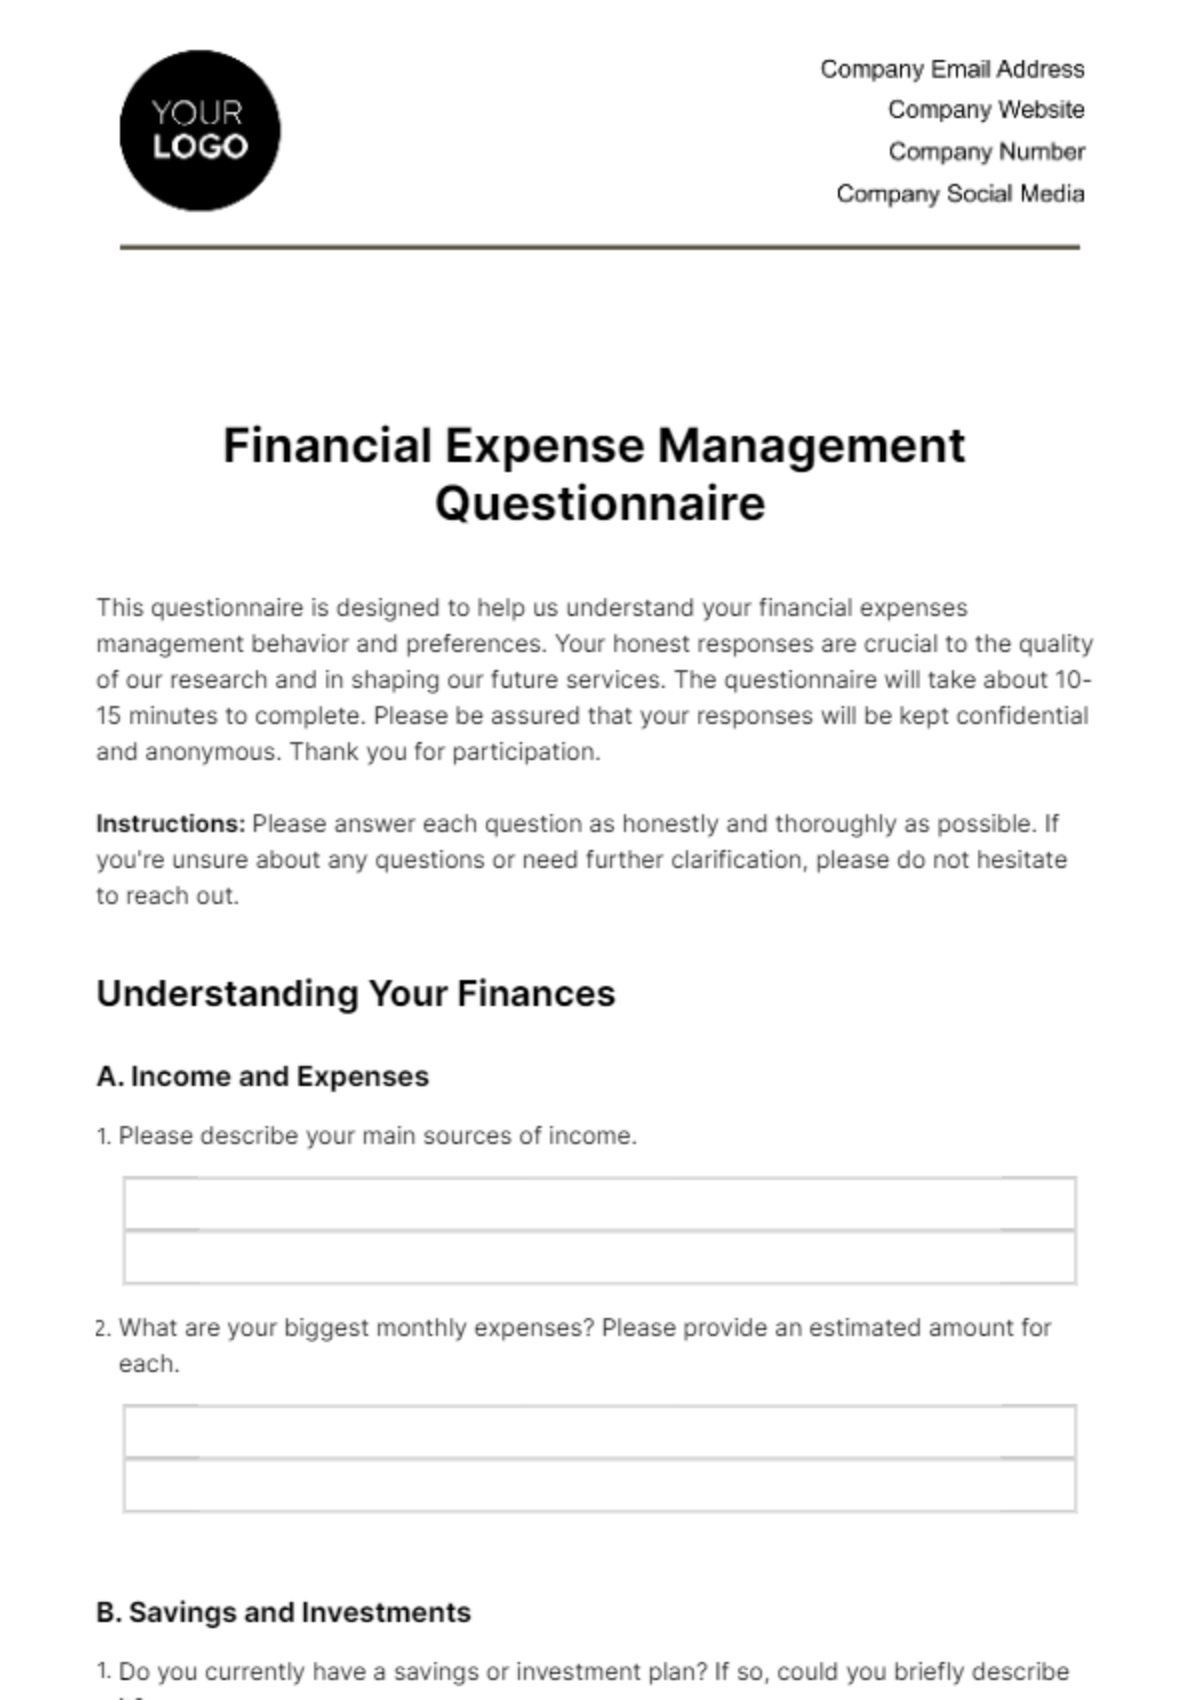 Financial Expense Management Questionnaire Template